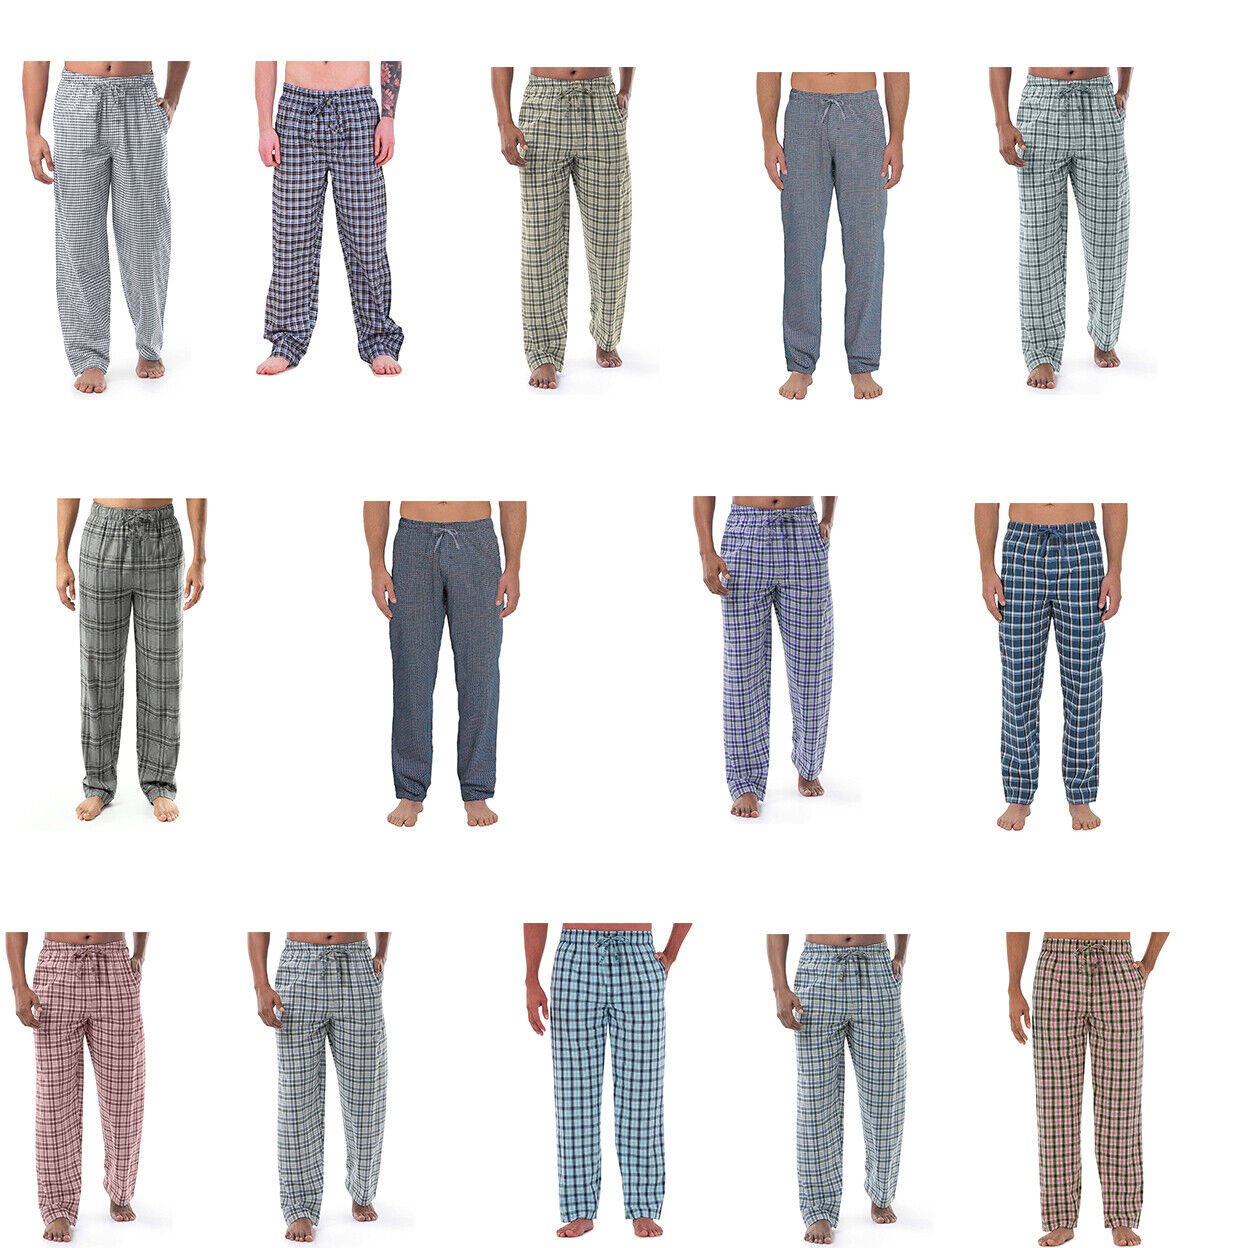 5-Pack: Men's Ultra-Soft Plaid Cotton Jersey Knit Comfy Sleep Lounge Pajama Pants - Medium